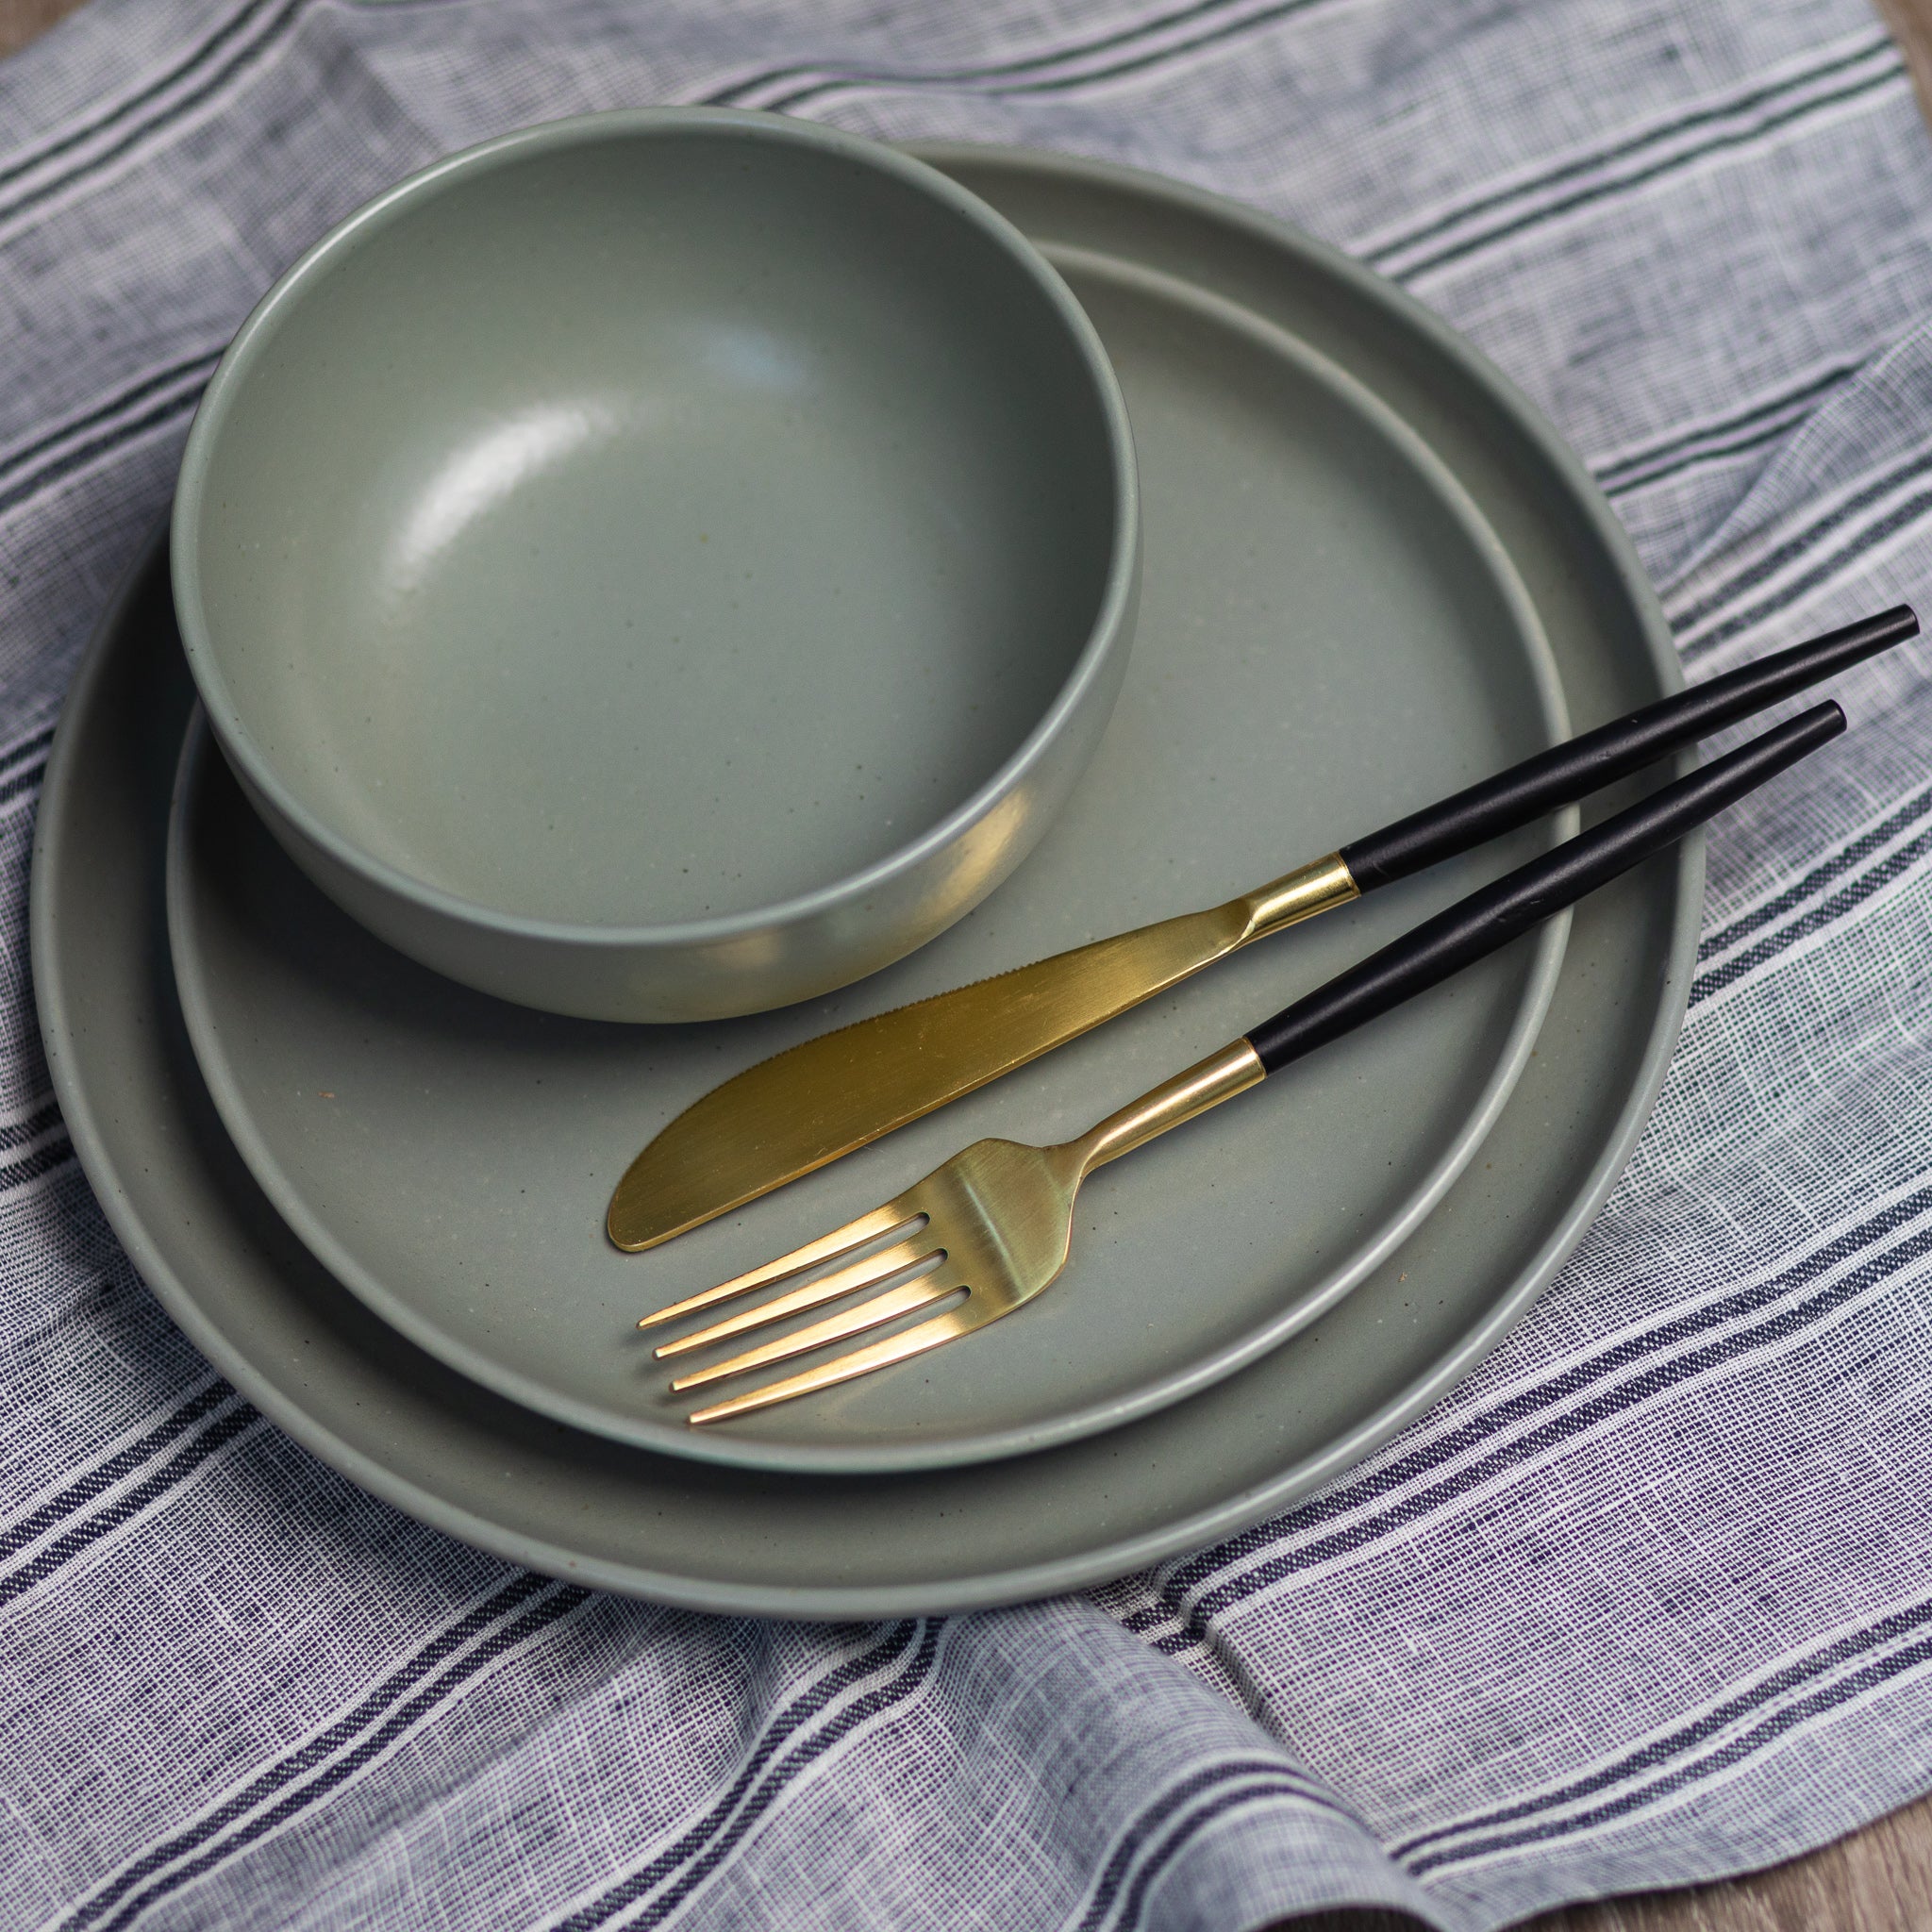 Pacifica Dinner Plate, Artichoke, Set of 6